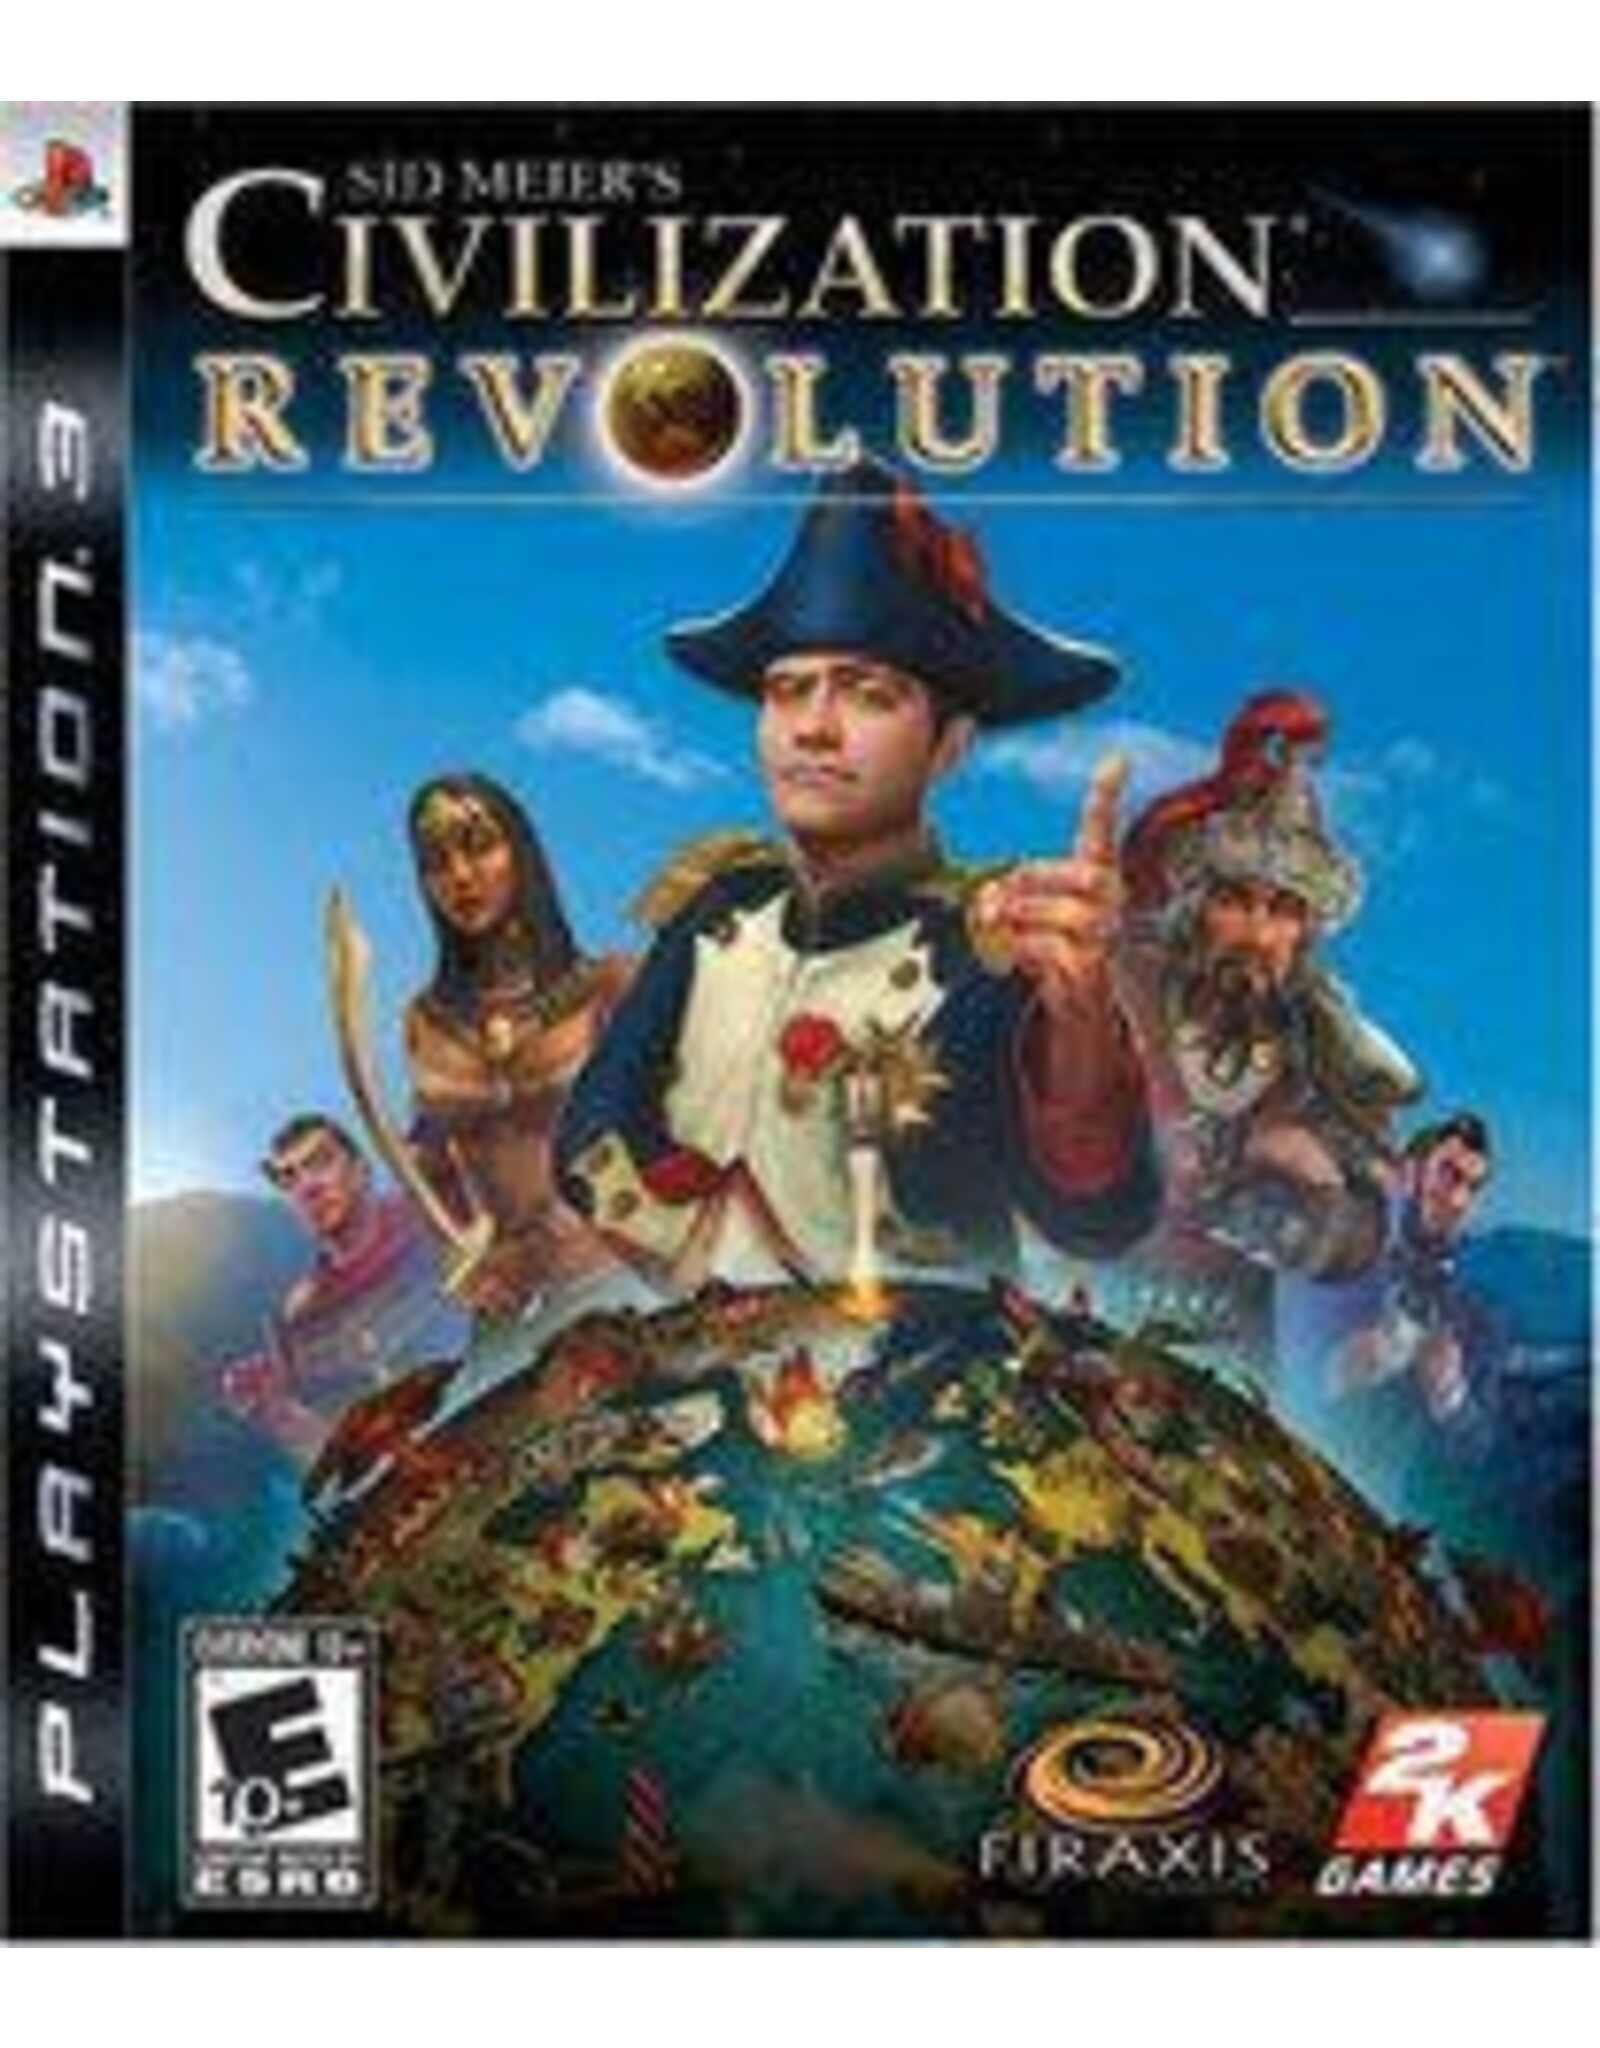 Playstation 3 Civilization Revolution (Used)